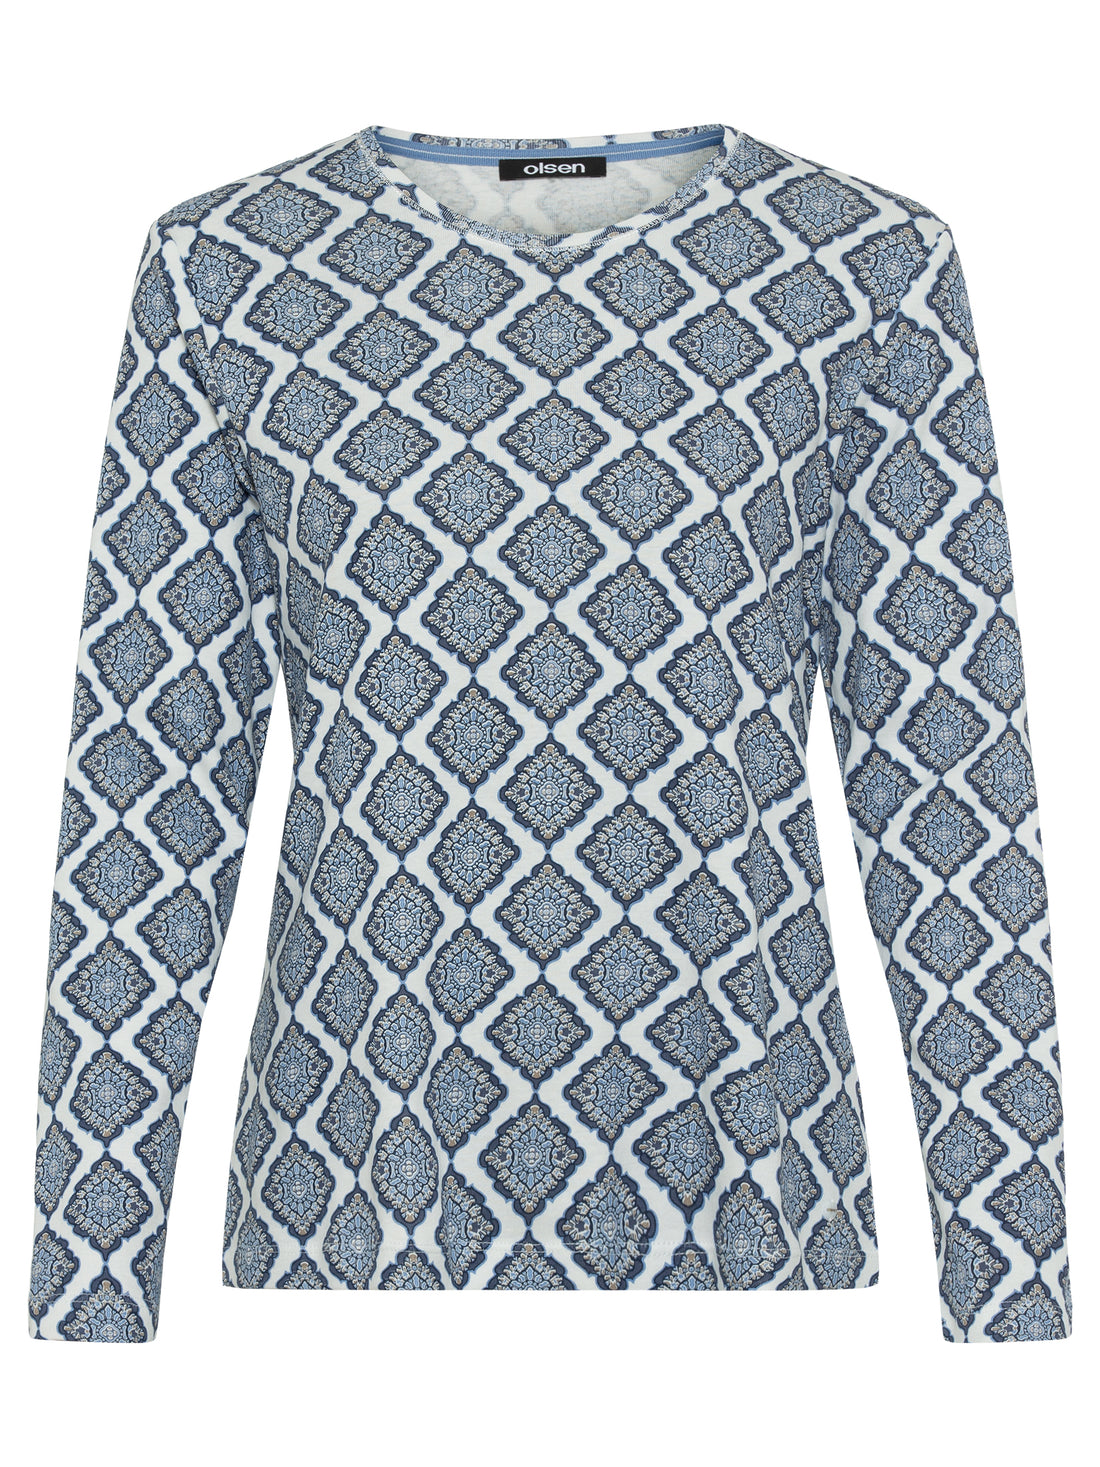 Olsen - Blue Diamond Print Long Sleeve Shirt